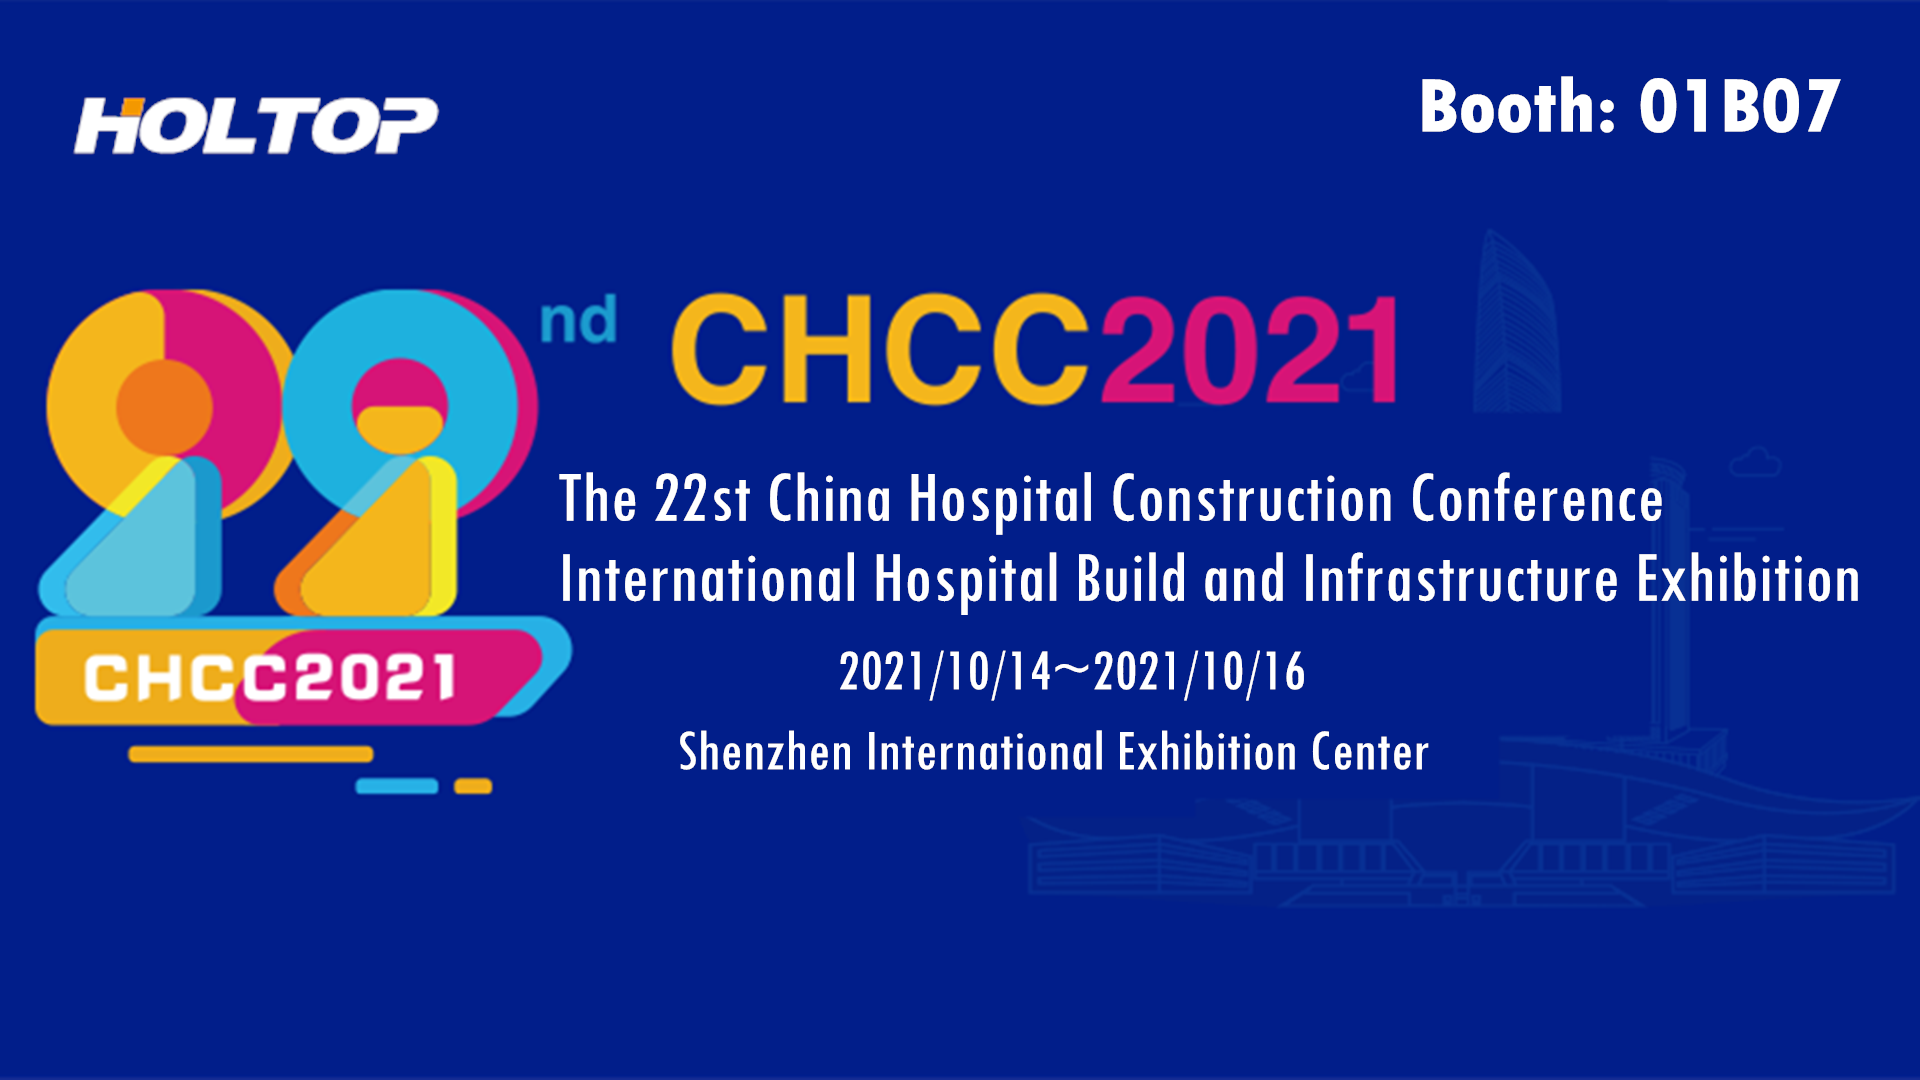 Holtop partecipa alla 22a edizione della China Hospital Construction Conference International Hospital Build and Infrastructure Exhibition (CHCC2021)